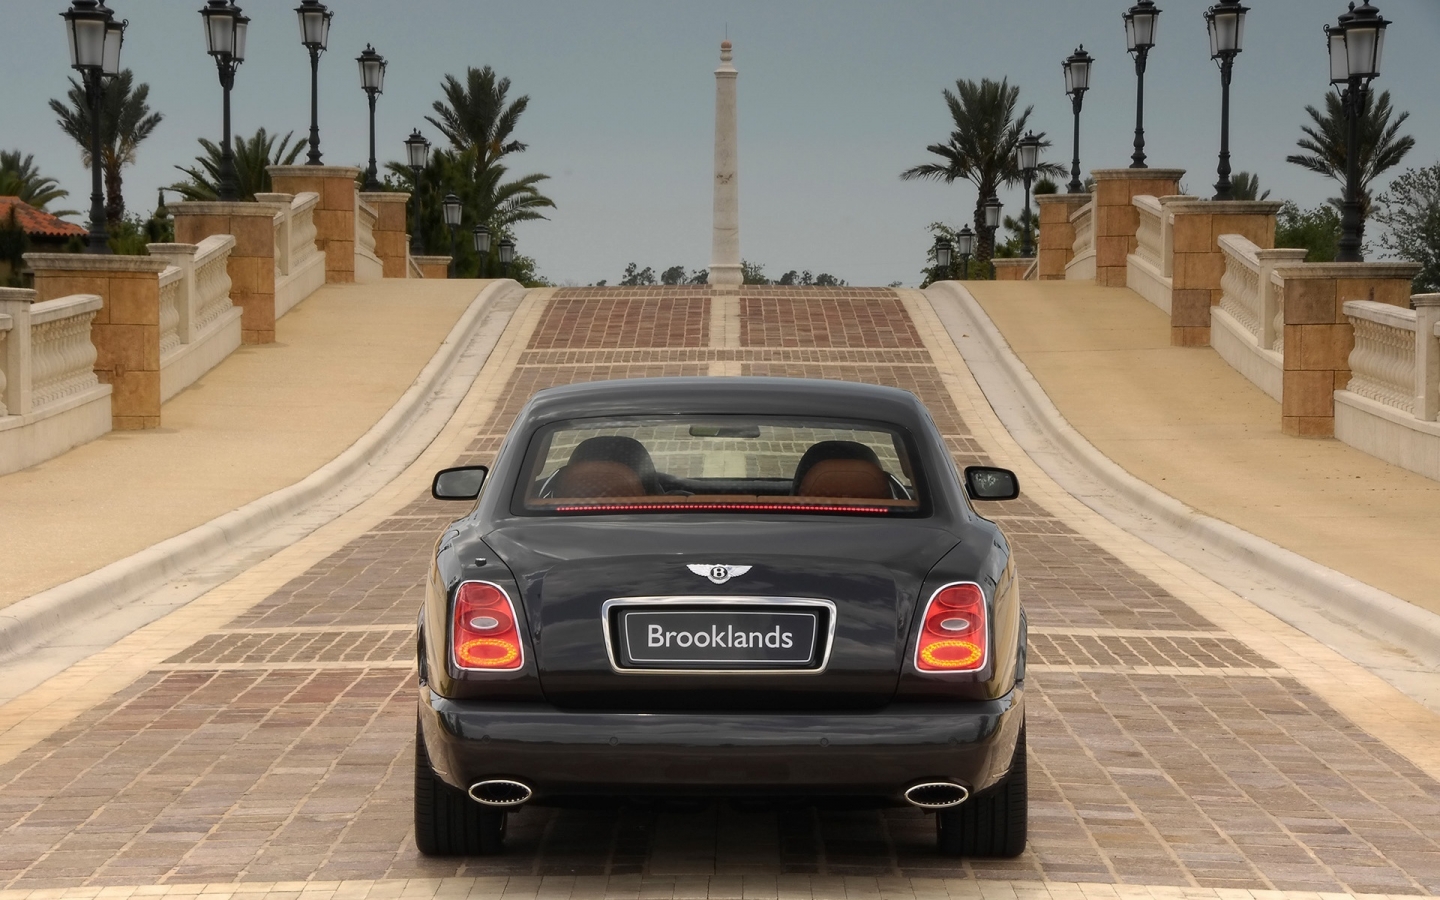 Bentley Brooklands Rear 2008 for 1440 x 900 widescreen resolution